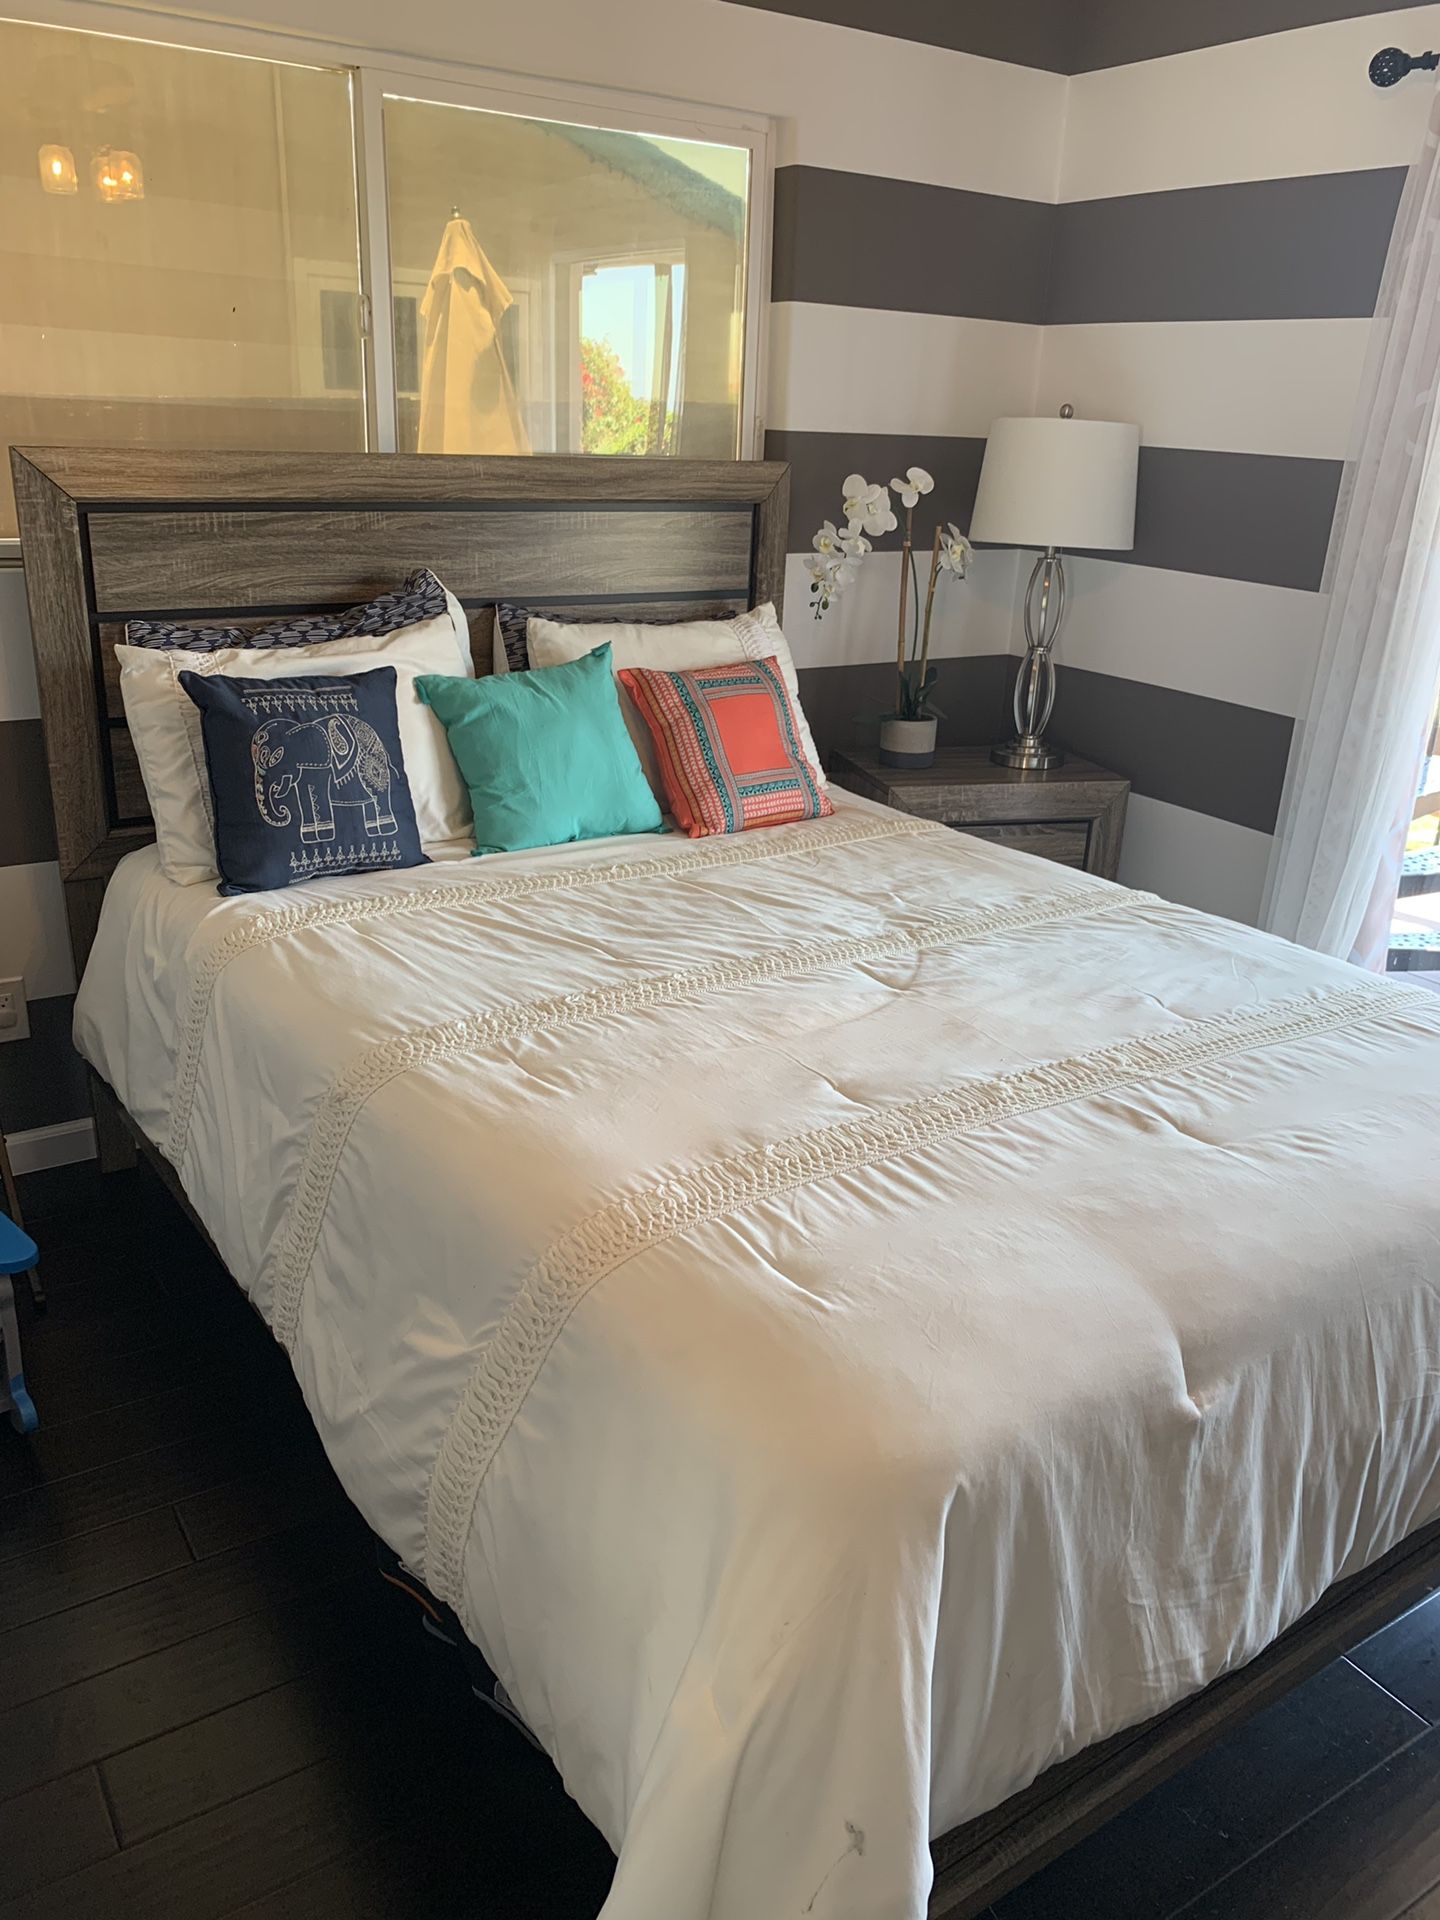 Queen bedroom set for sale $300 excellent condition